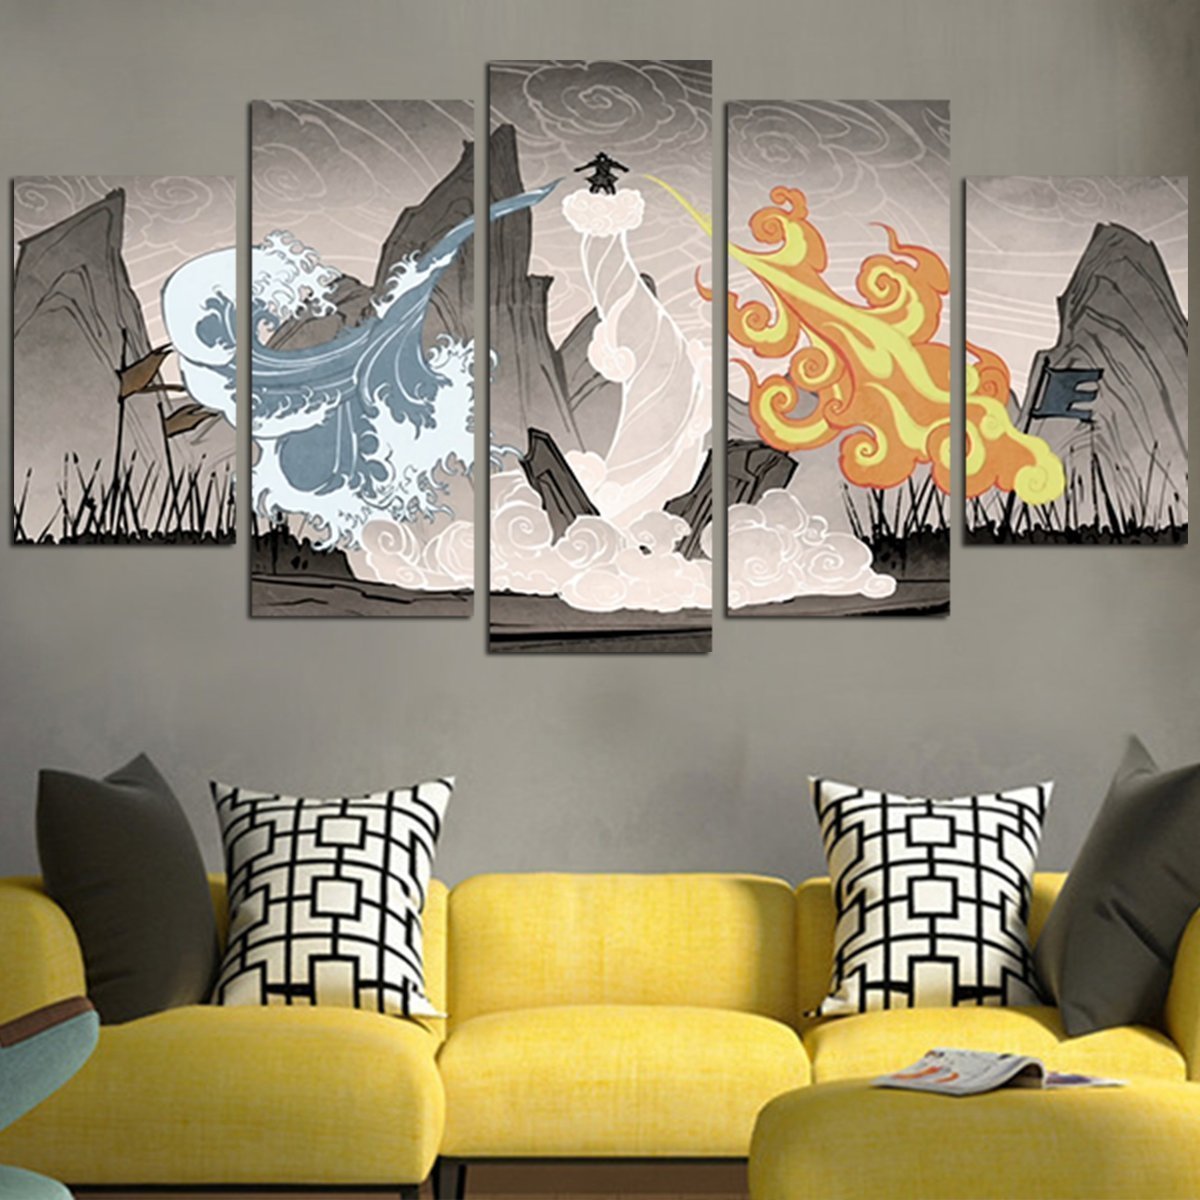 tableau avatar the last airbender fire and water movie 5 pices impression sur toile peinture art pour la dcoration intrieuretrv12